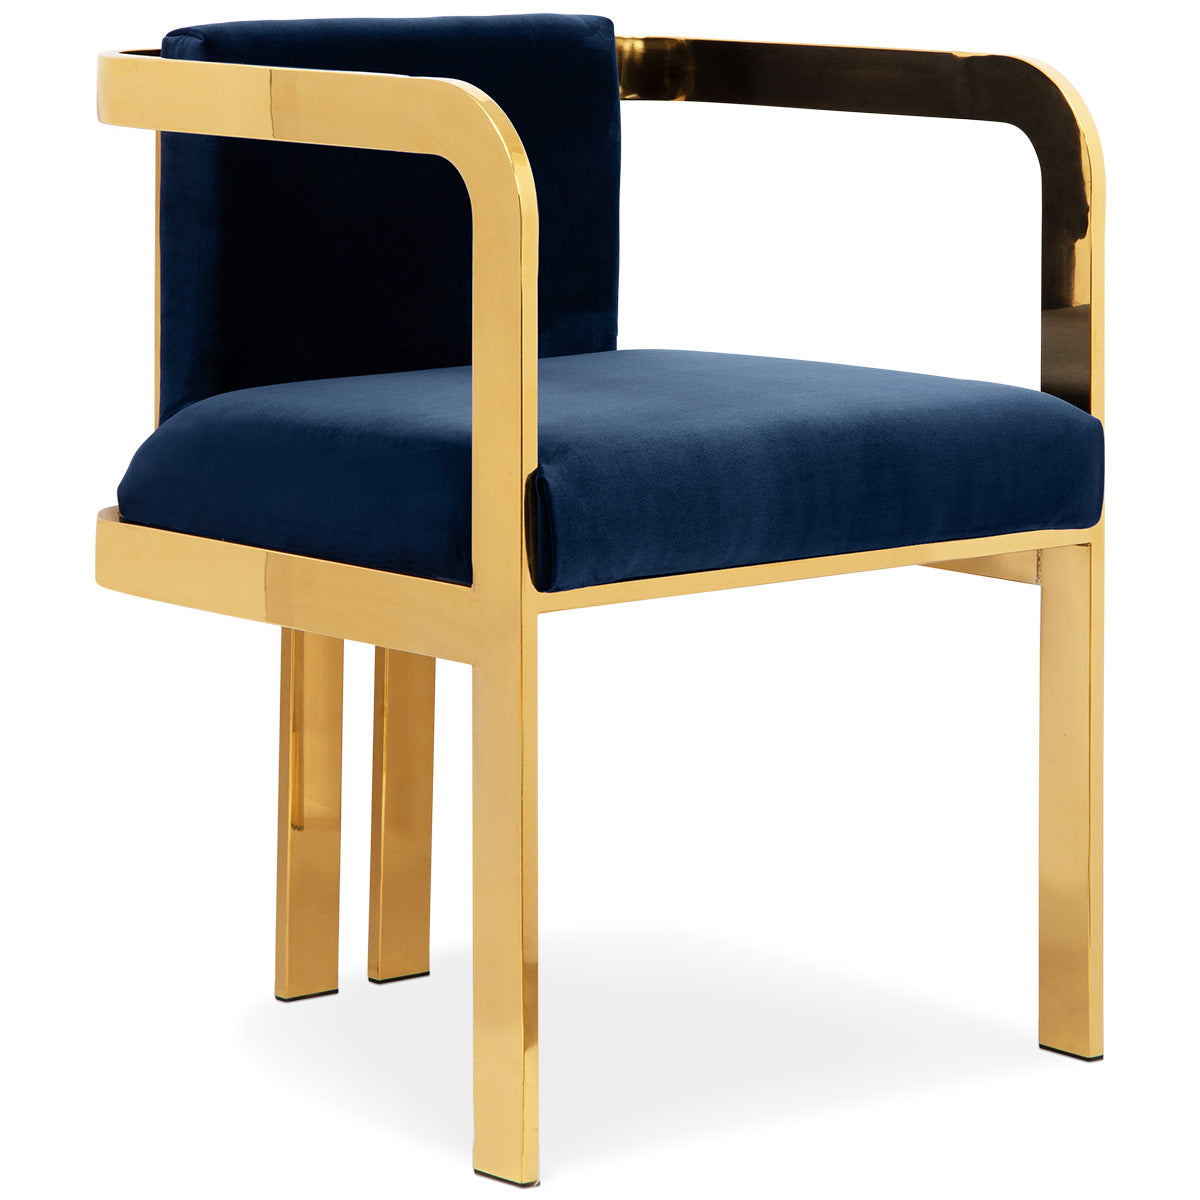 Kingpin Dining Chair in Indigo Blue